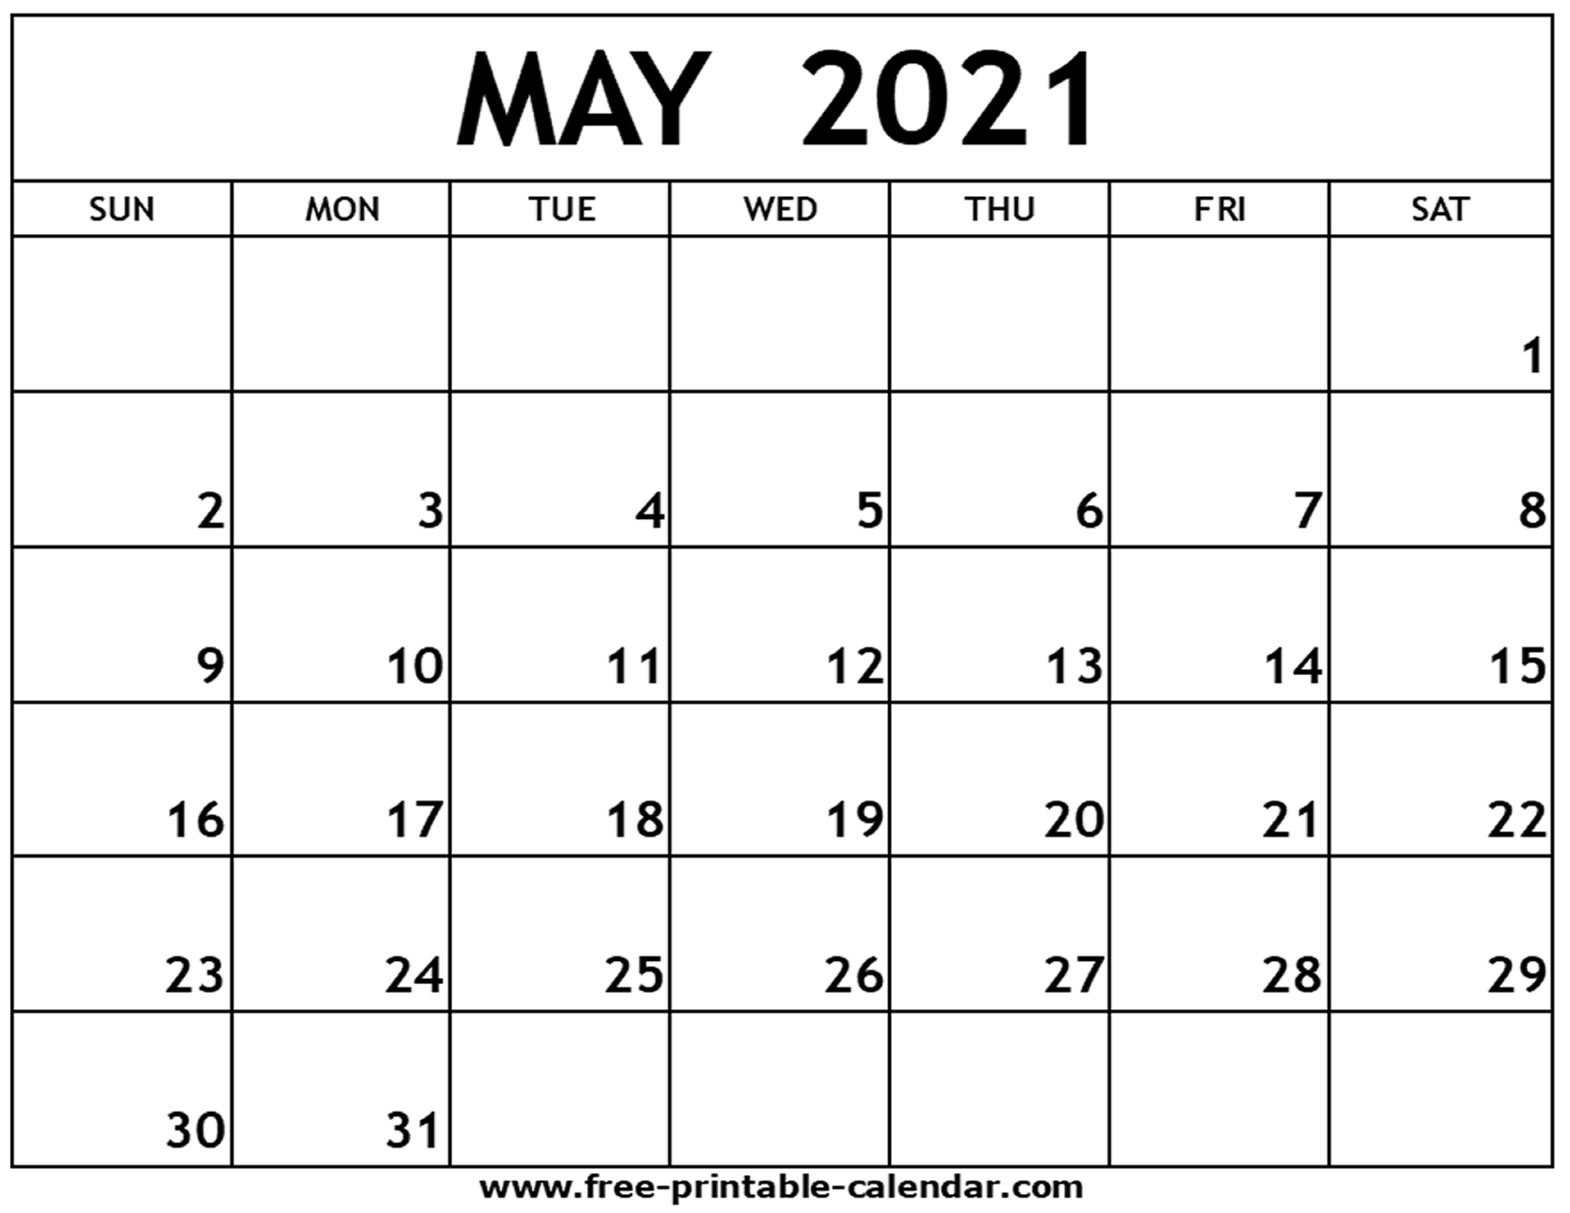 May 2021 Printable Calendar - Free-Printable-Calendar May 2021 Calendar